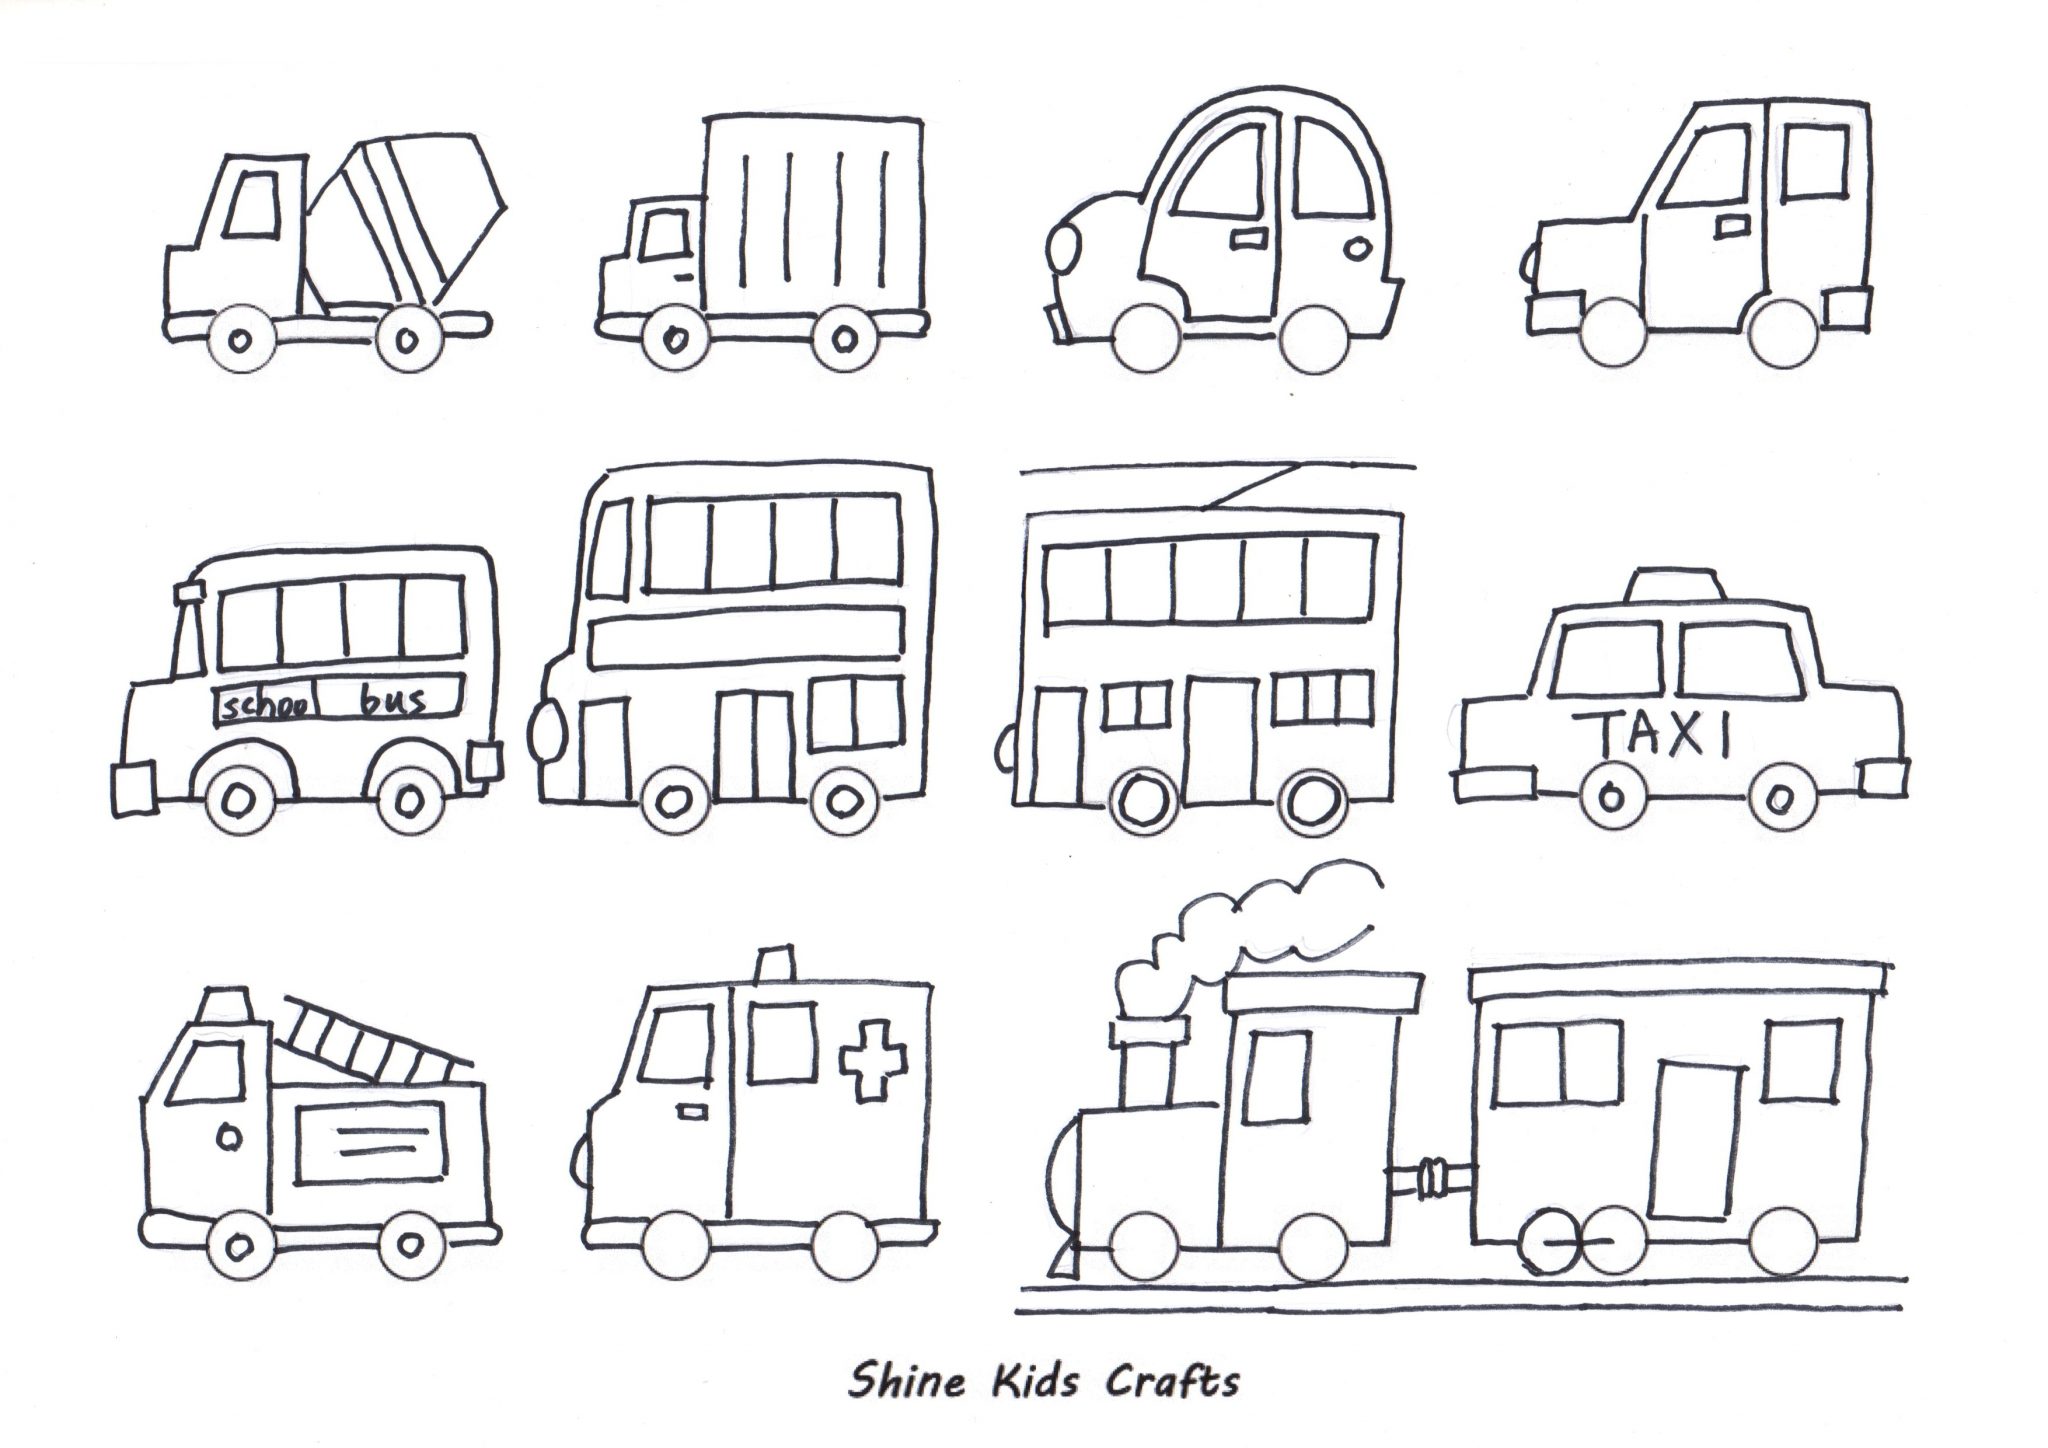 Future vehicle drawing Vectors & Illustrations for Free Download | Freepik